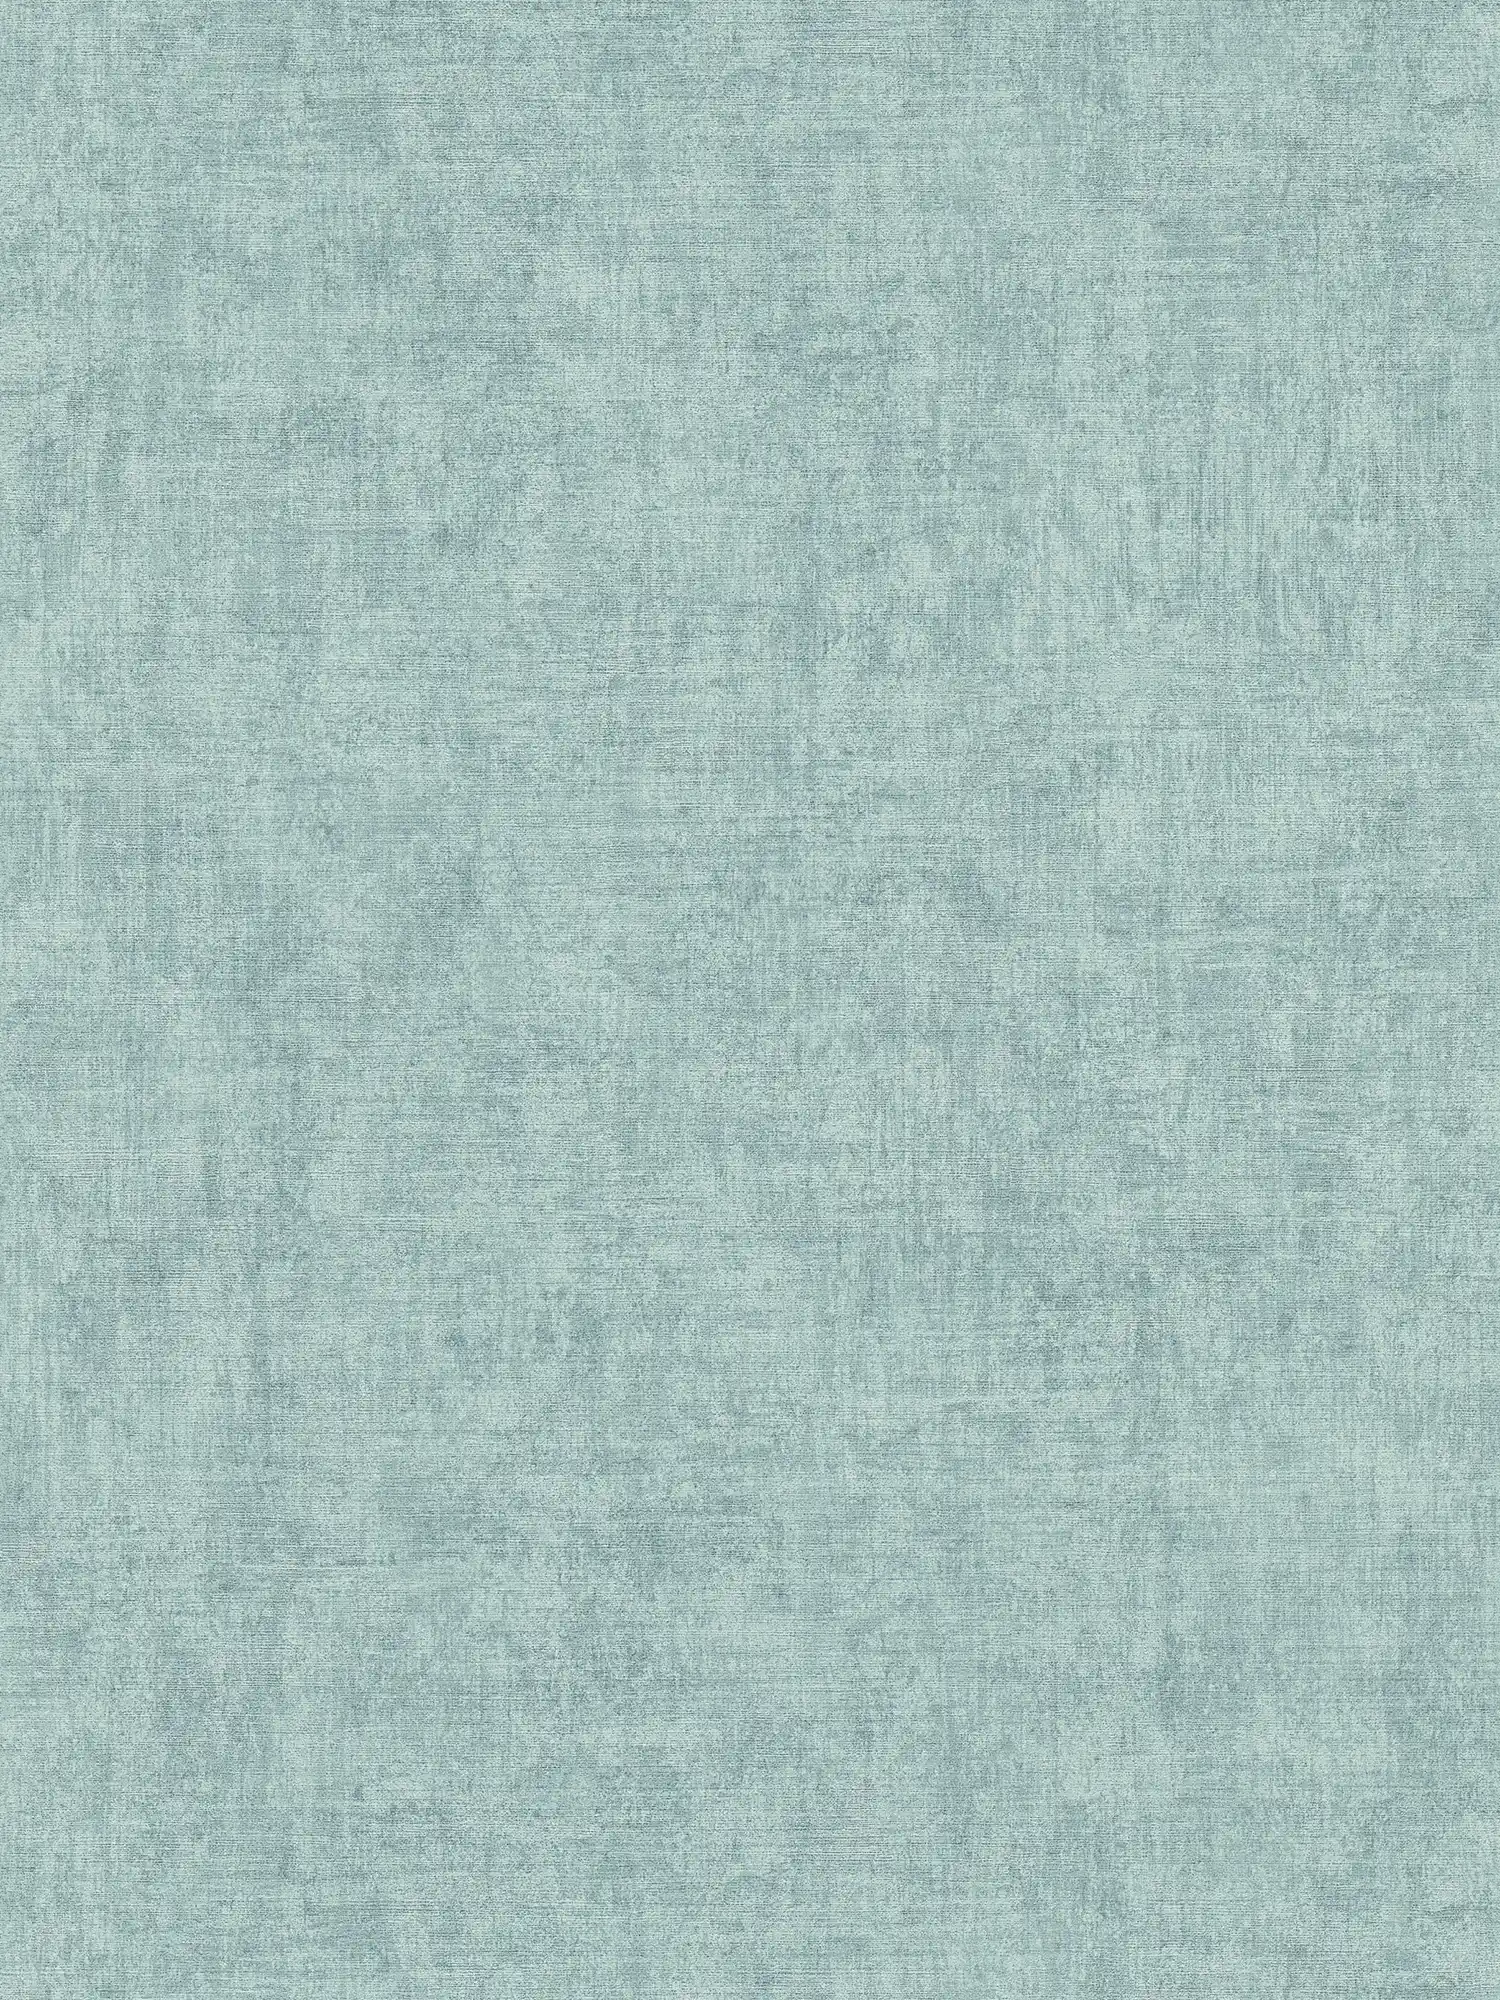 Non-woven wallpaper plain, mottled, textured pattern - blue
